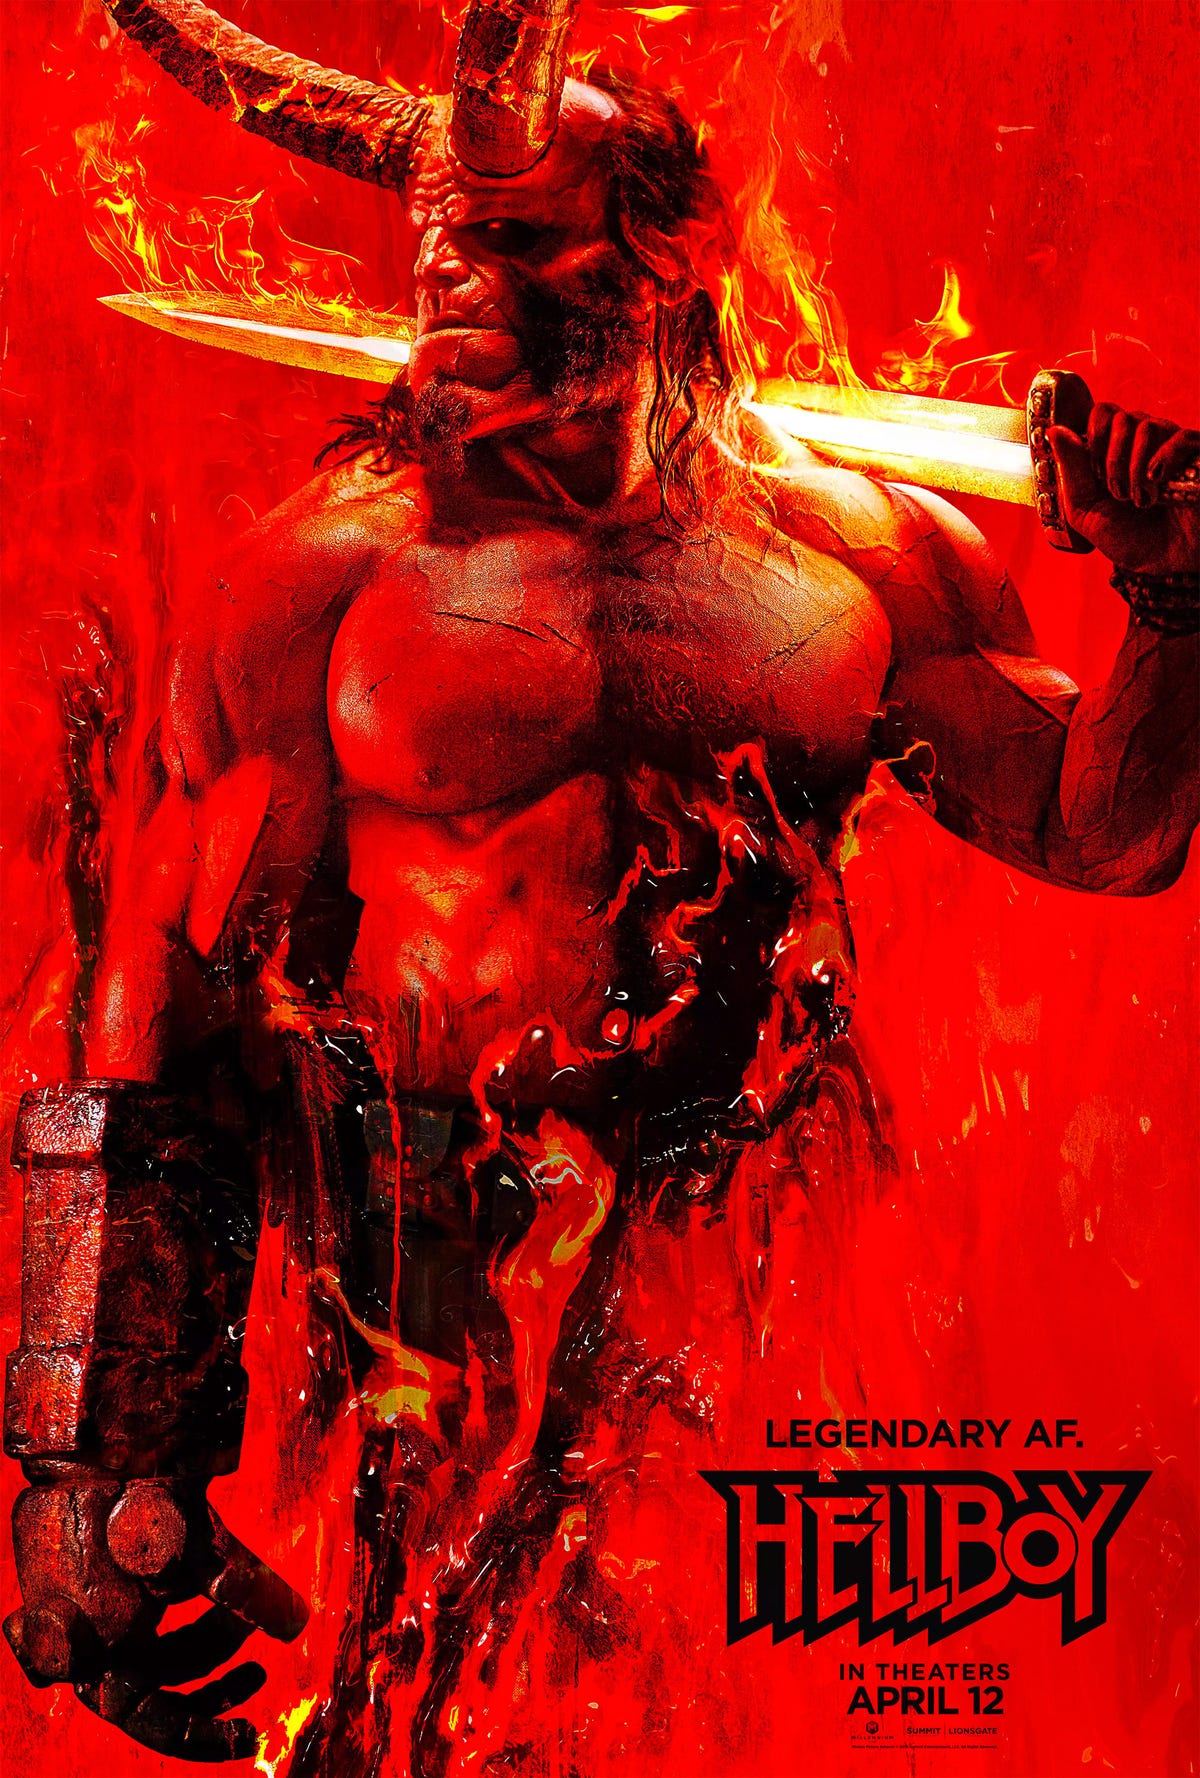 David Harbour Hellboy Movie 2018 Promotional Art Wallpapers